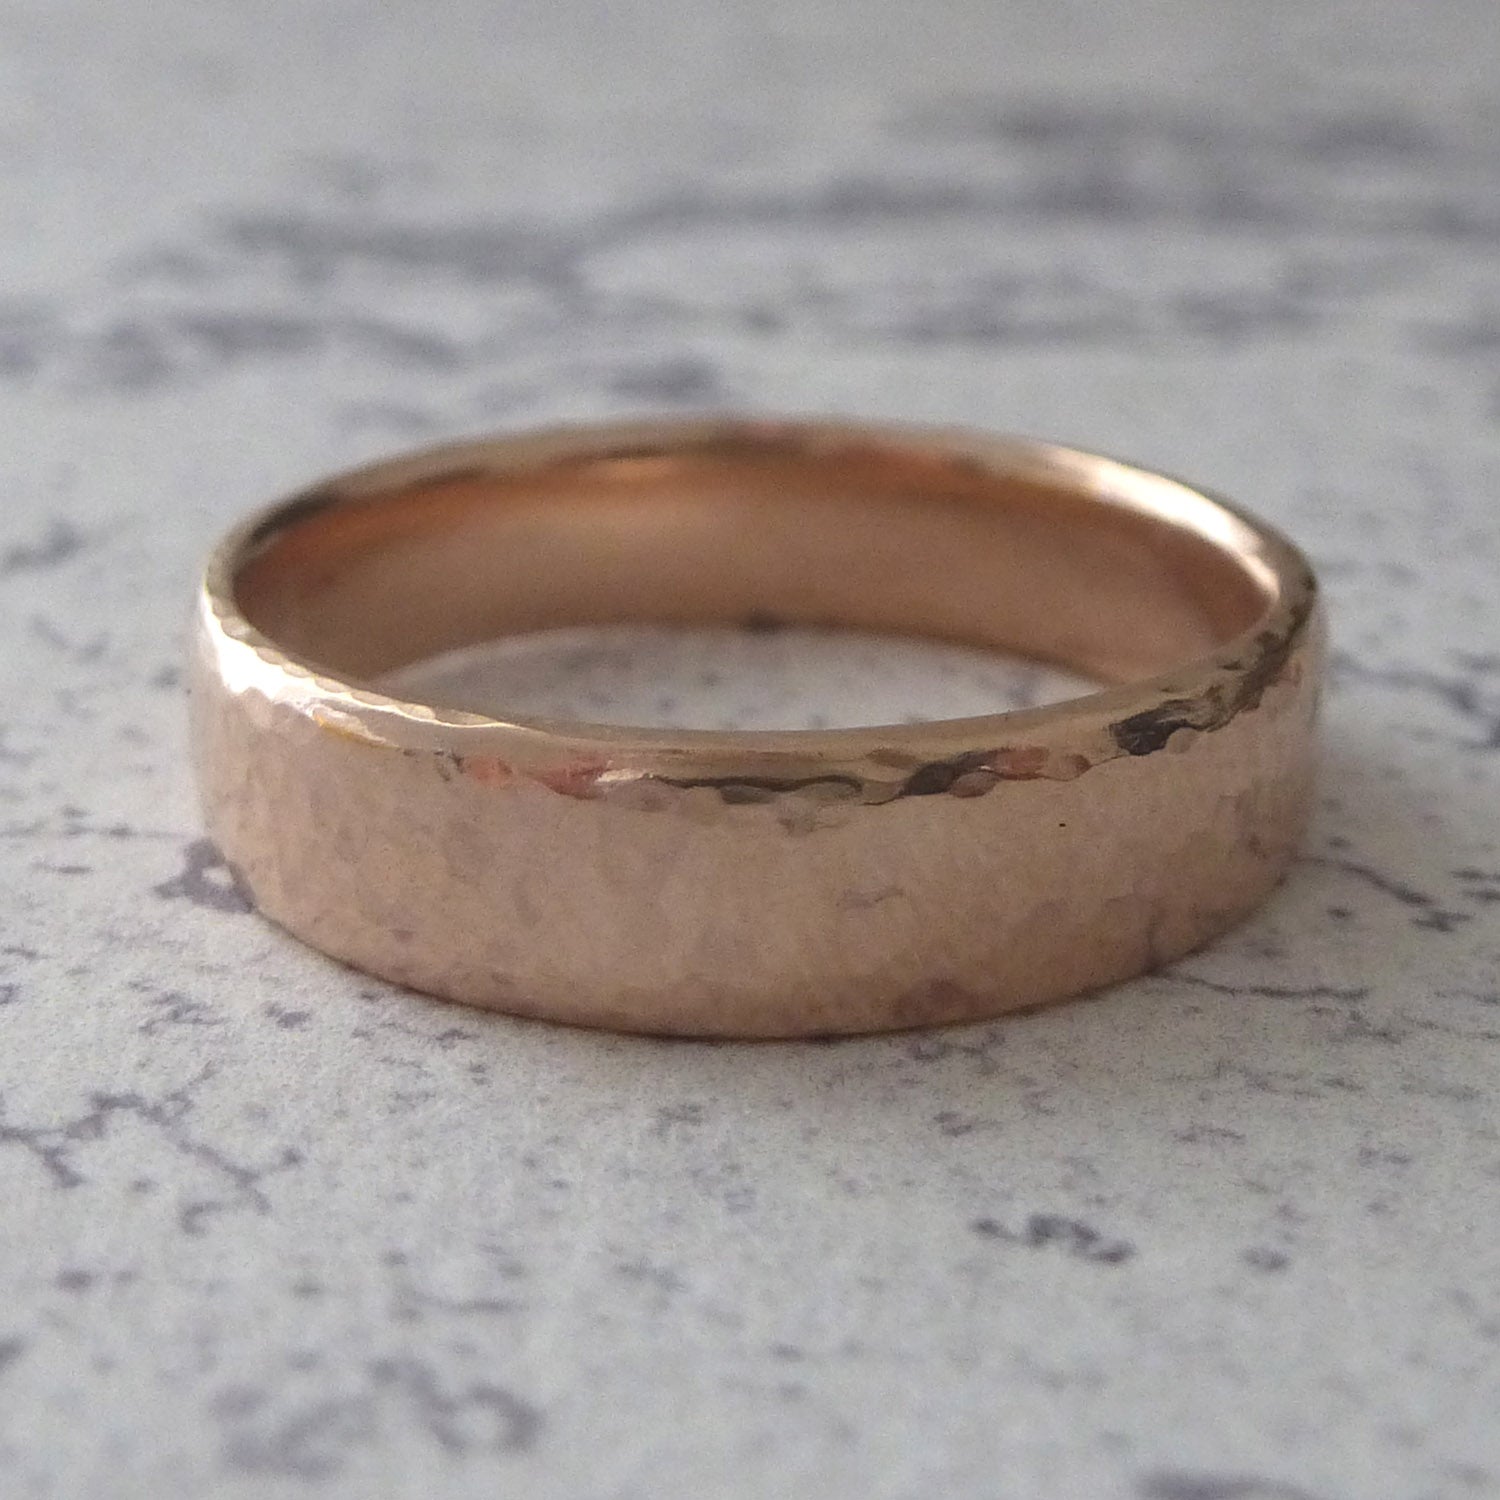 5mm 9ct rose gold hammered wedding ring, soft court shape